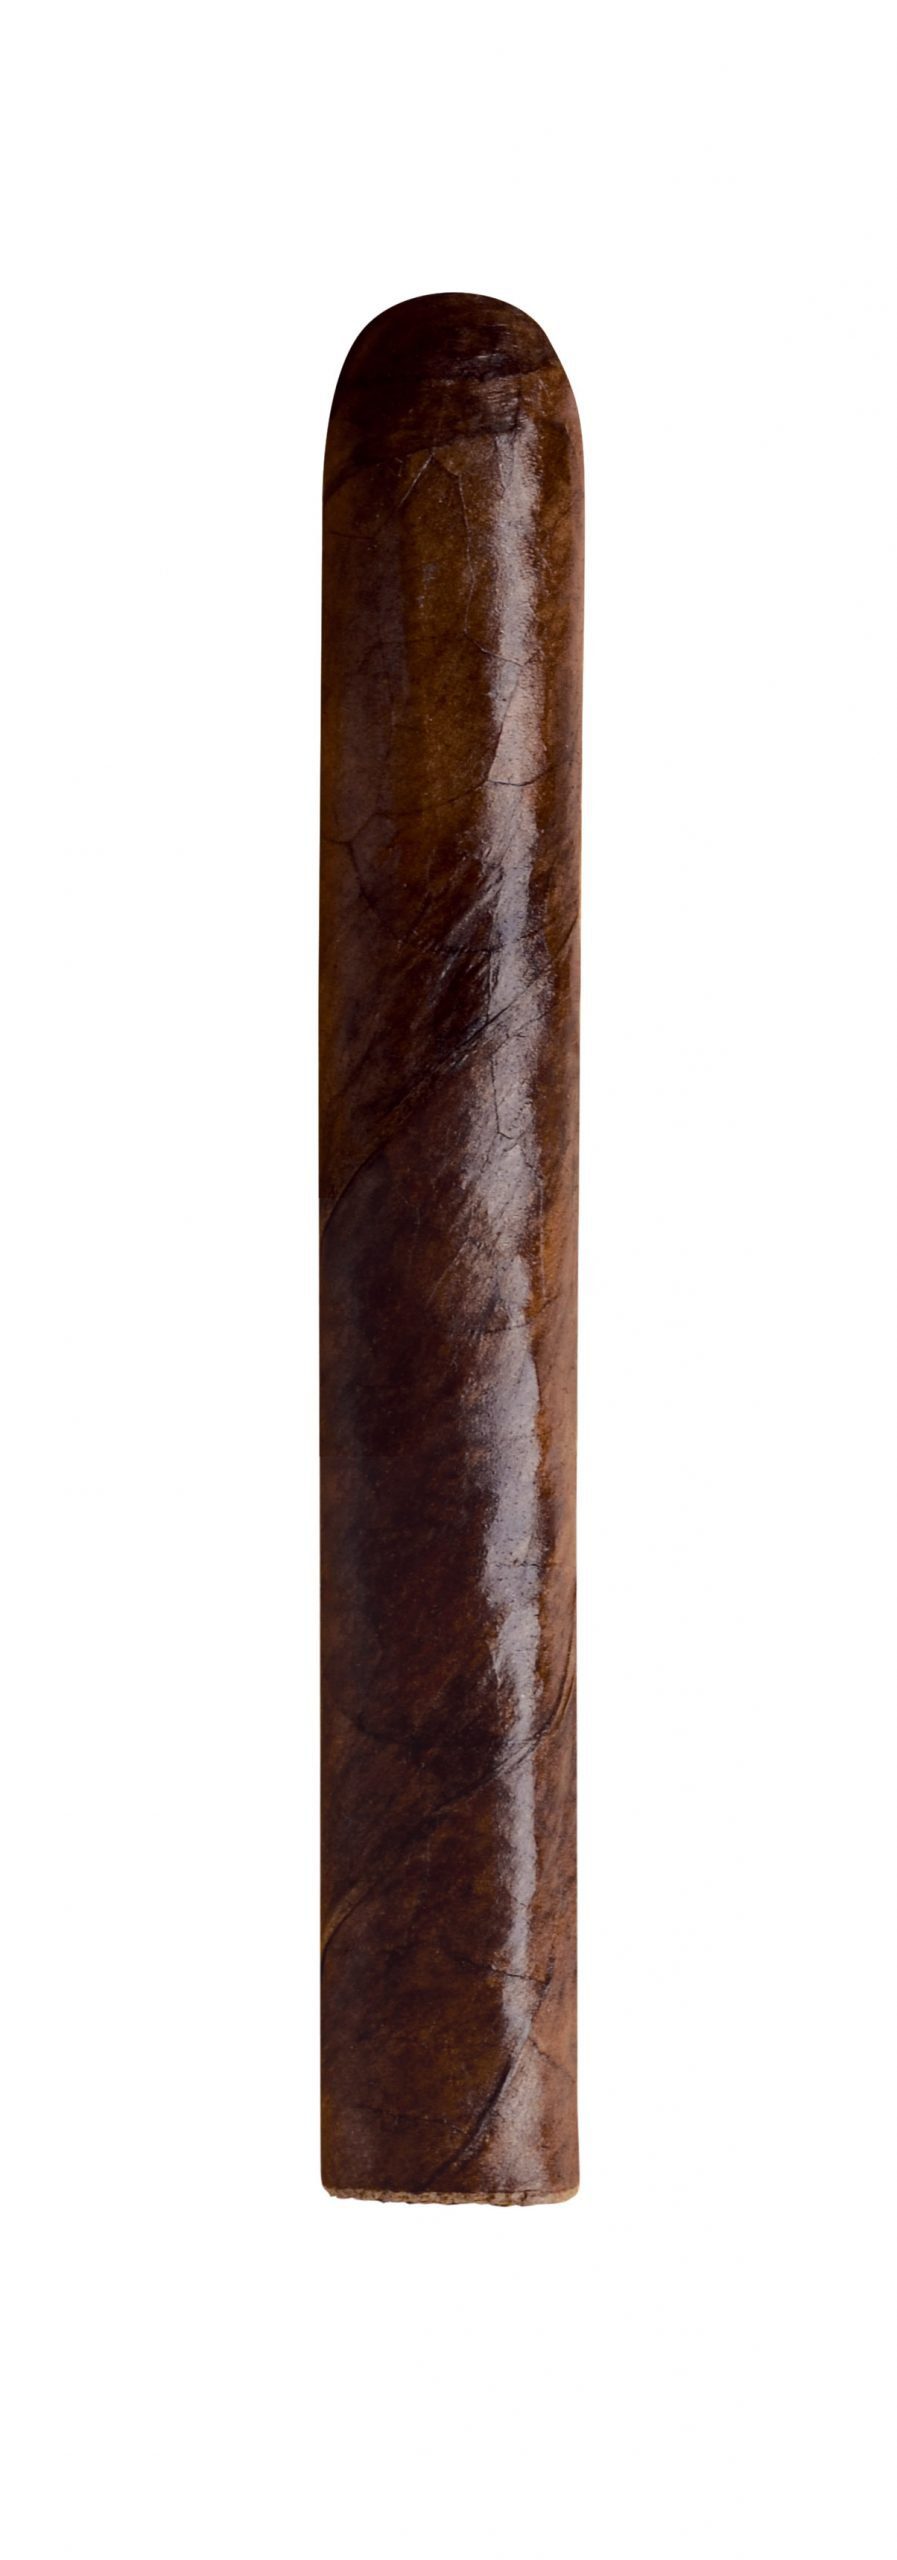 decision 450 single cigar